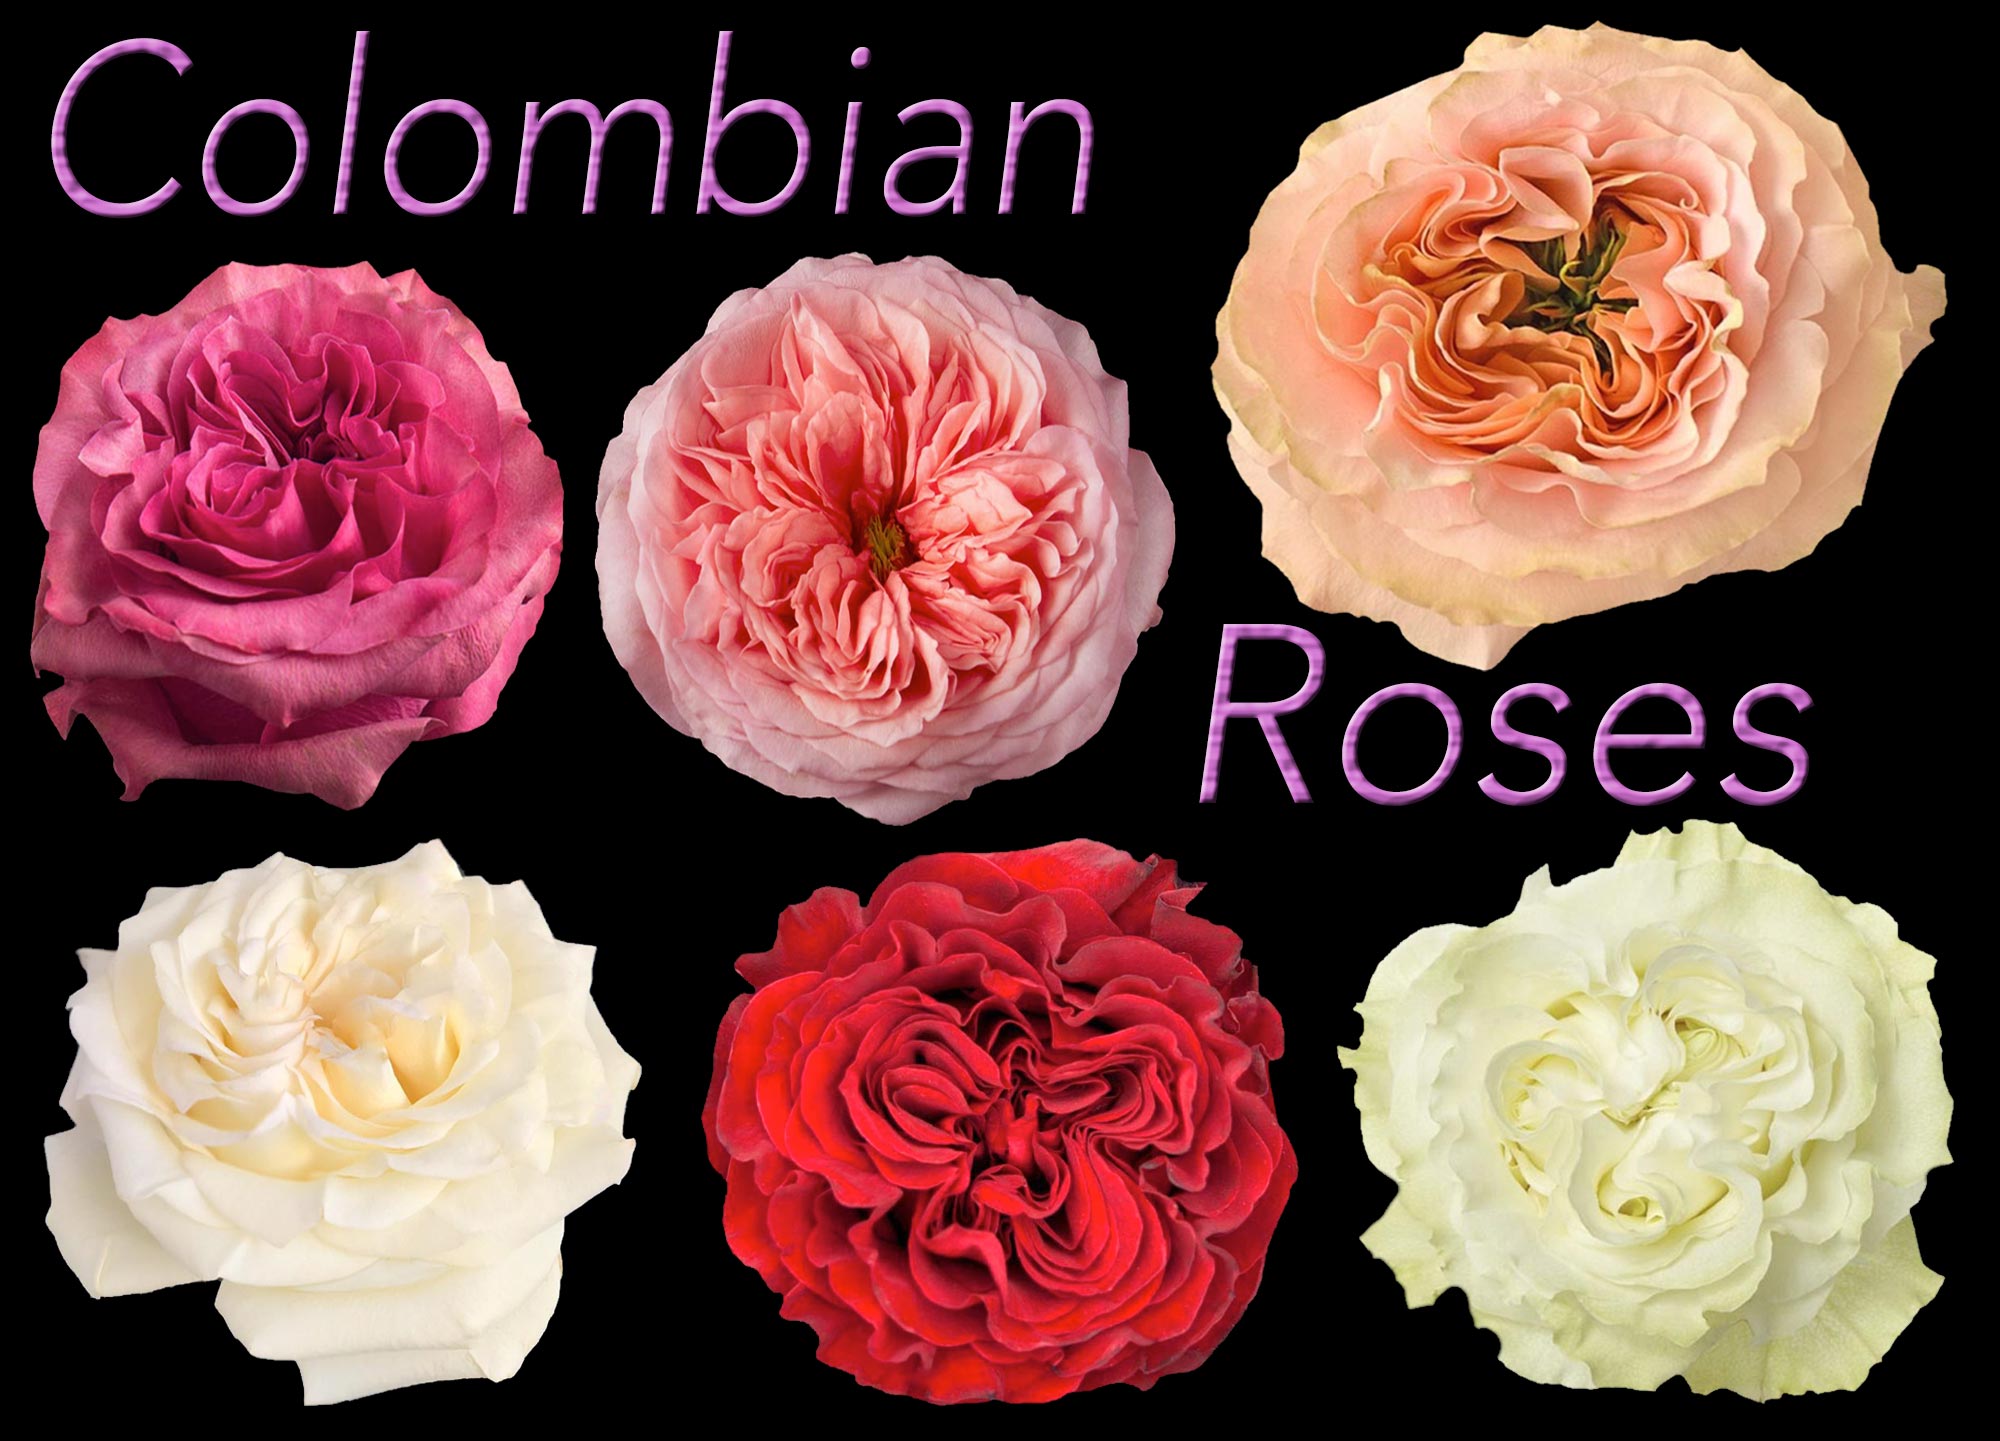 COLOMBIAN ROSES CALOUNDRA SUNSHINE COAST